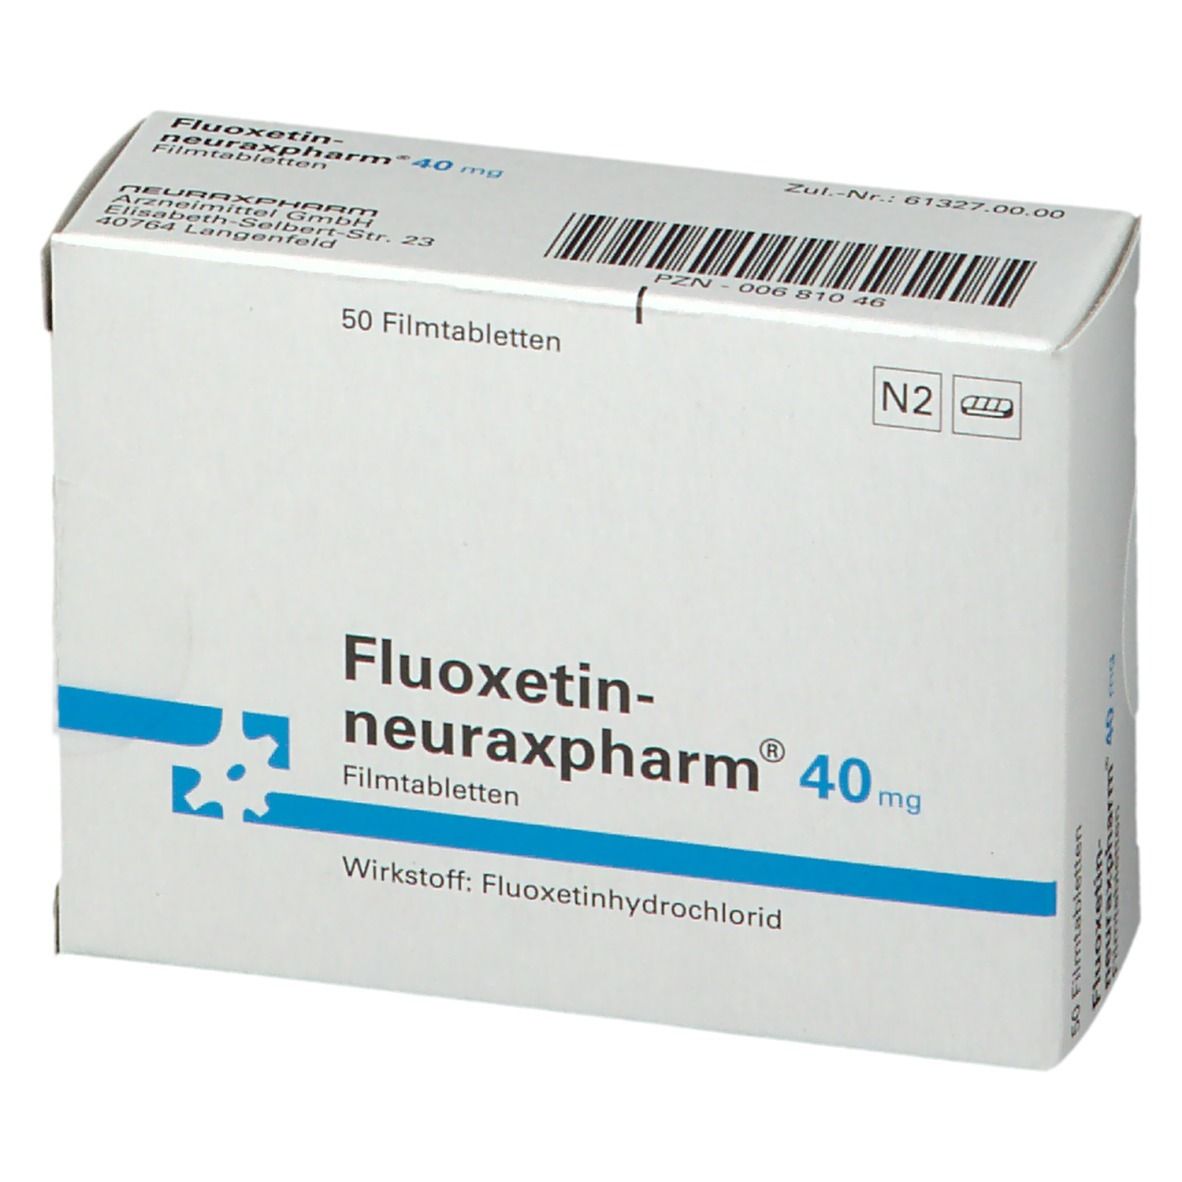 Fluoxetin-neuraxpharm® 40 mg